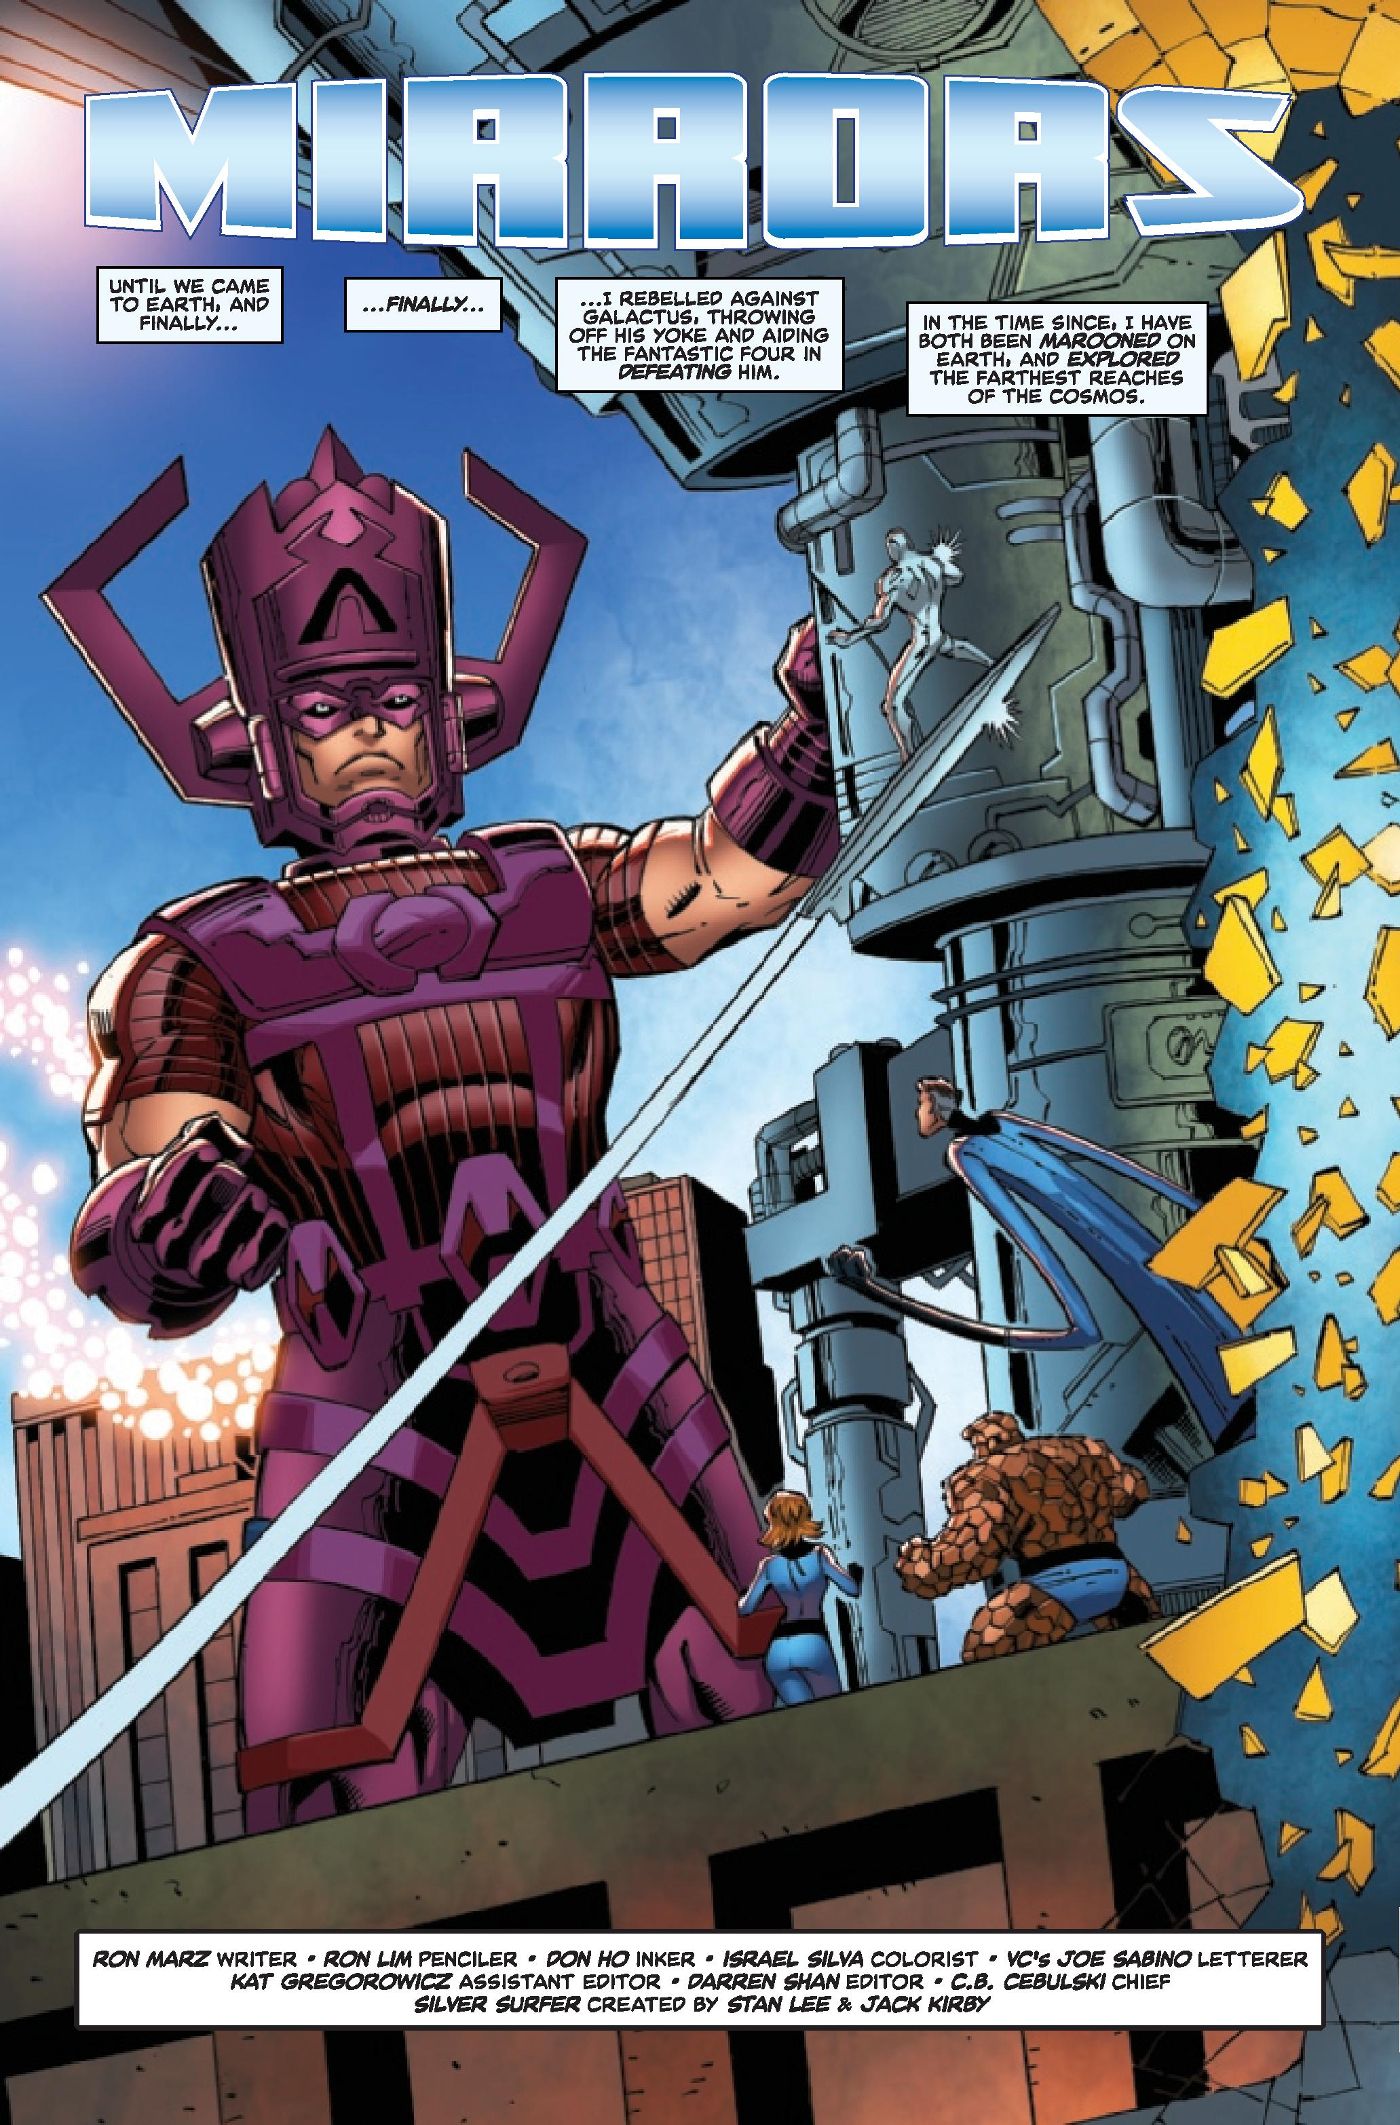 Galactus attacks Earth and the Fantastic Four